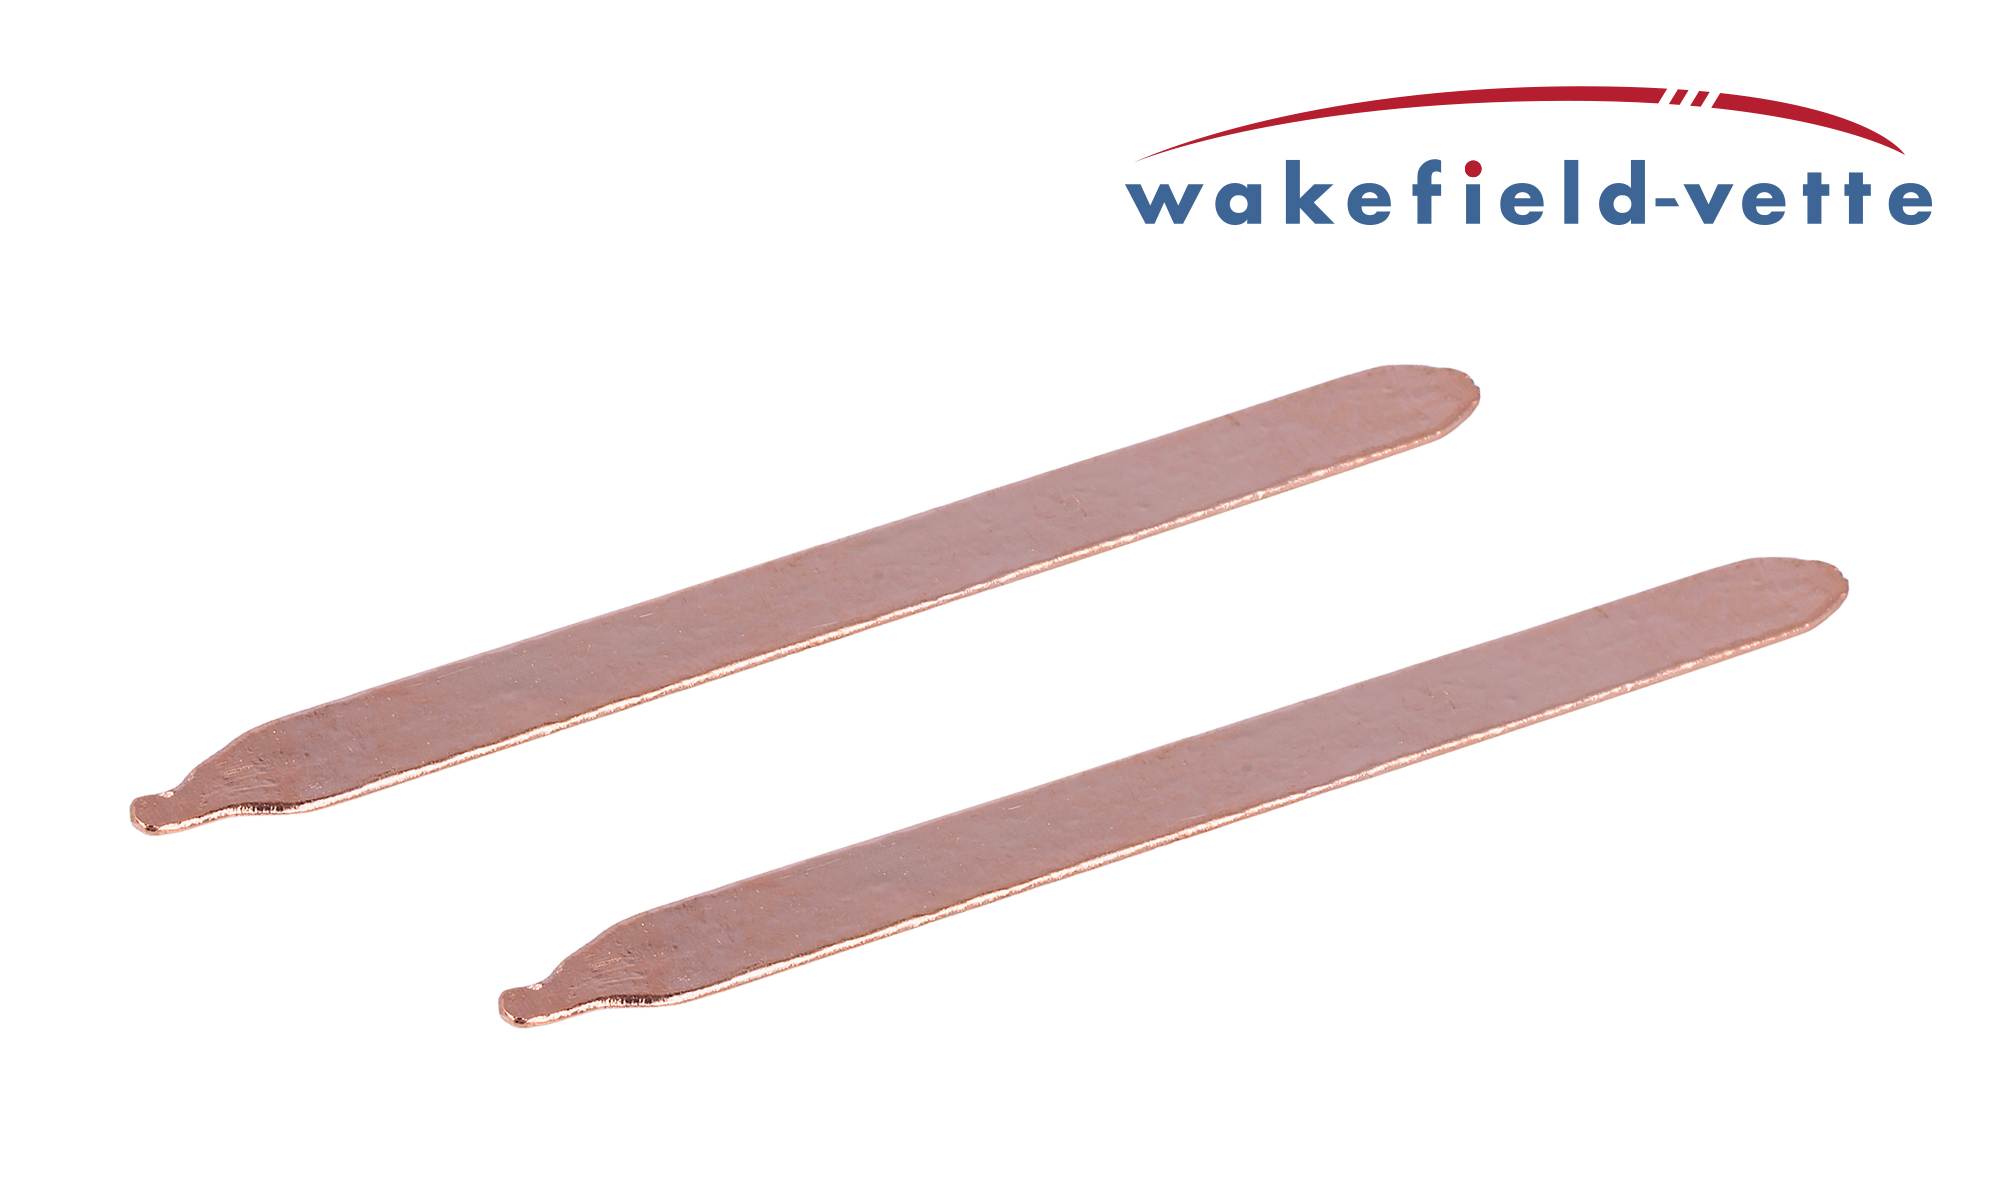 Wakefield-Vette heat pipes